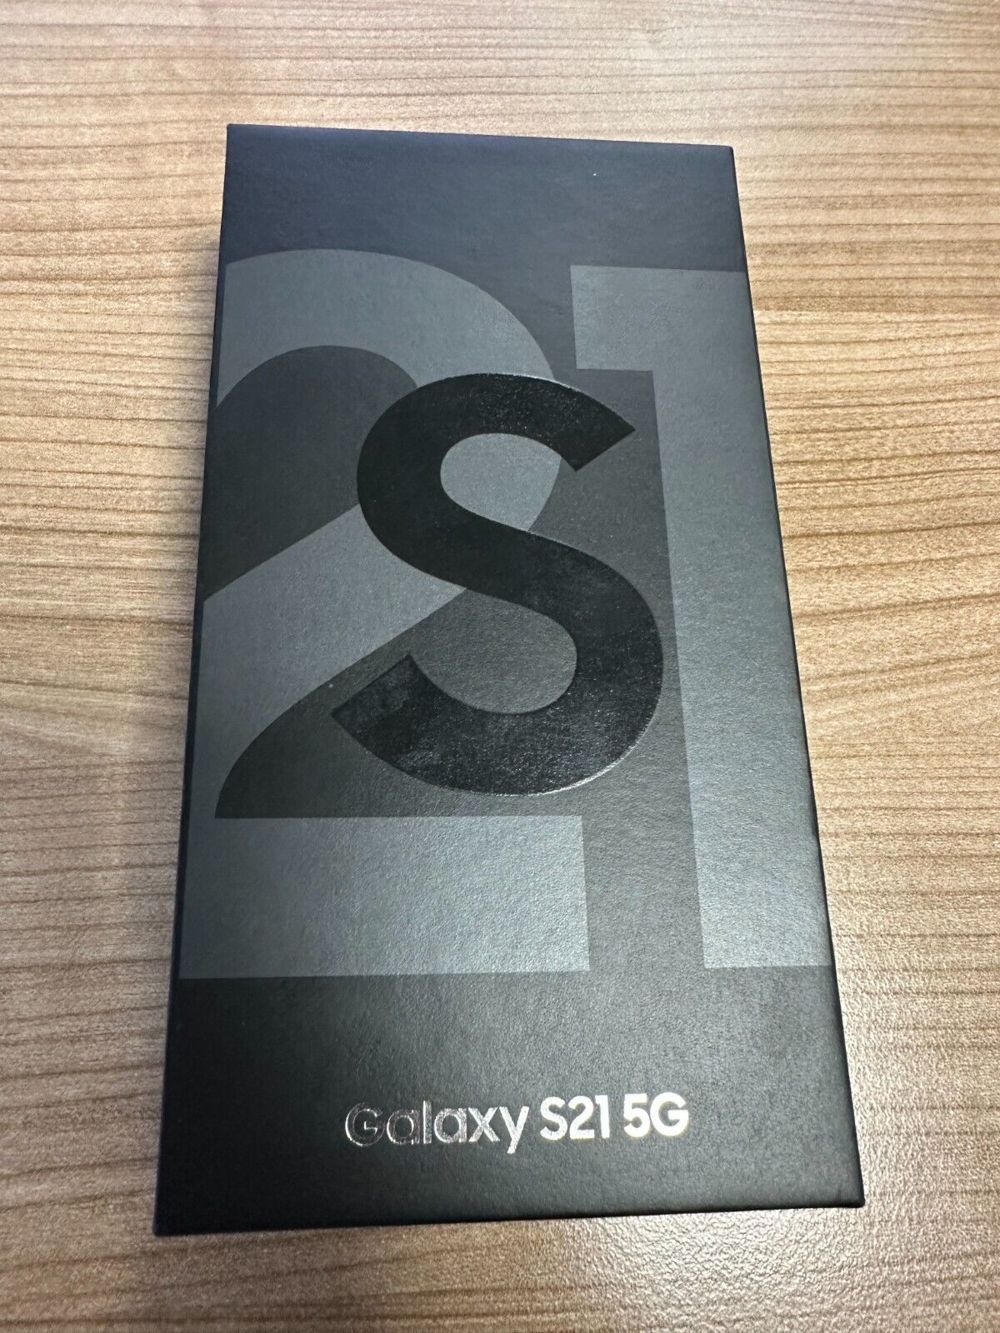 Samsung Galaxy S21 5G (NEU) 128GB - Phantom Gray (Ohne Simlock) Model:B08QZSP9TP